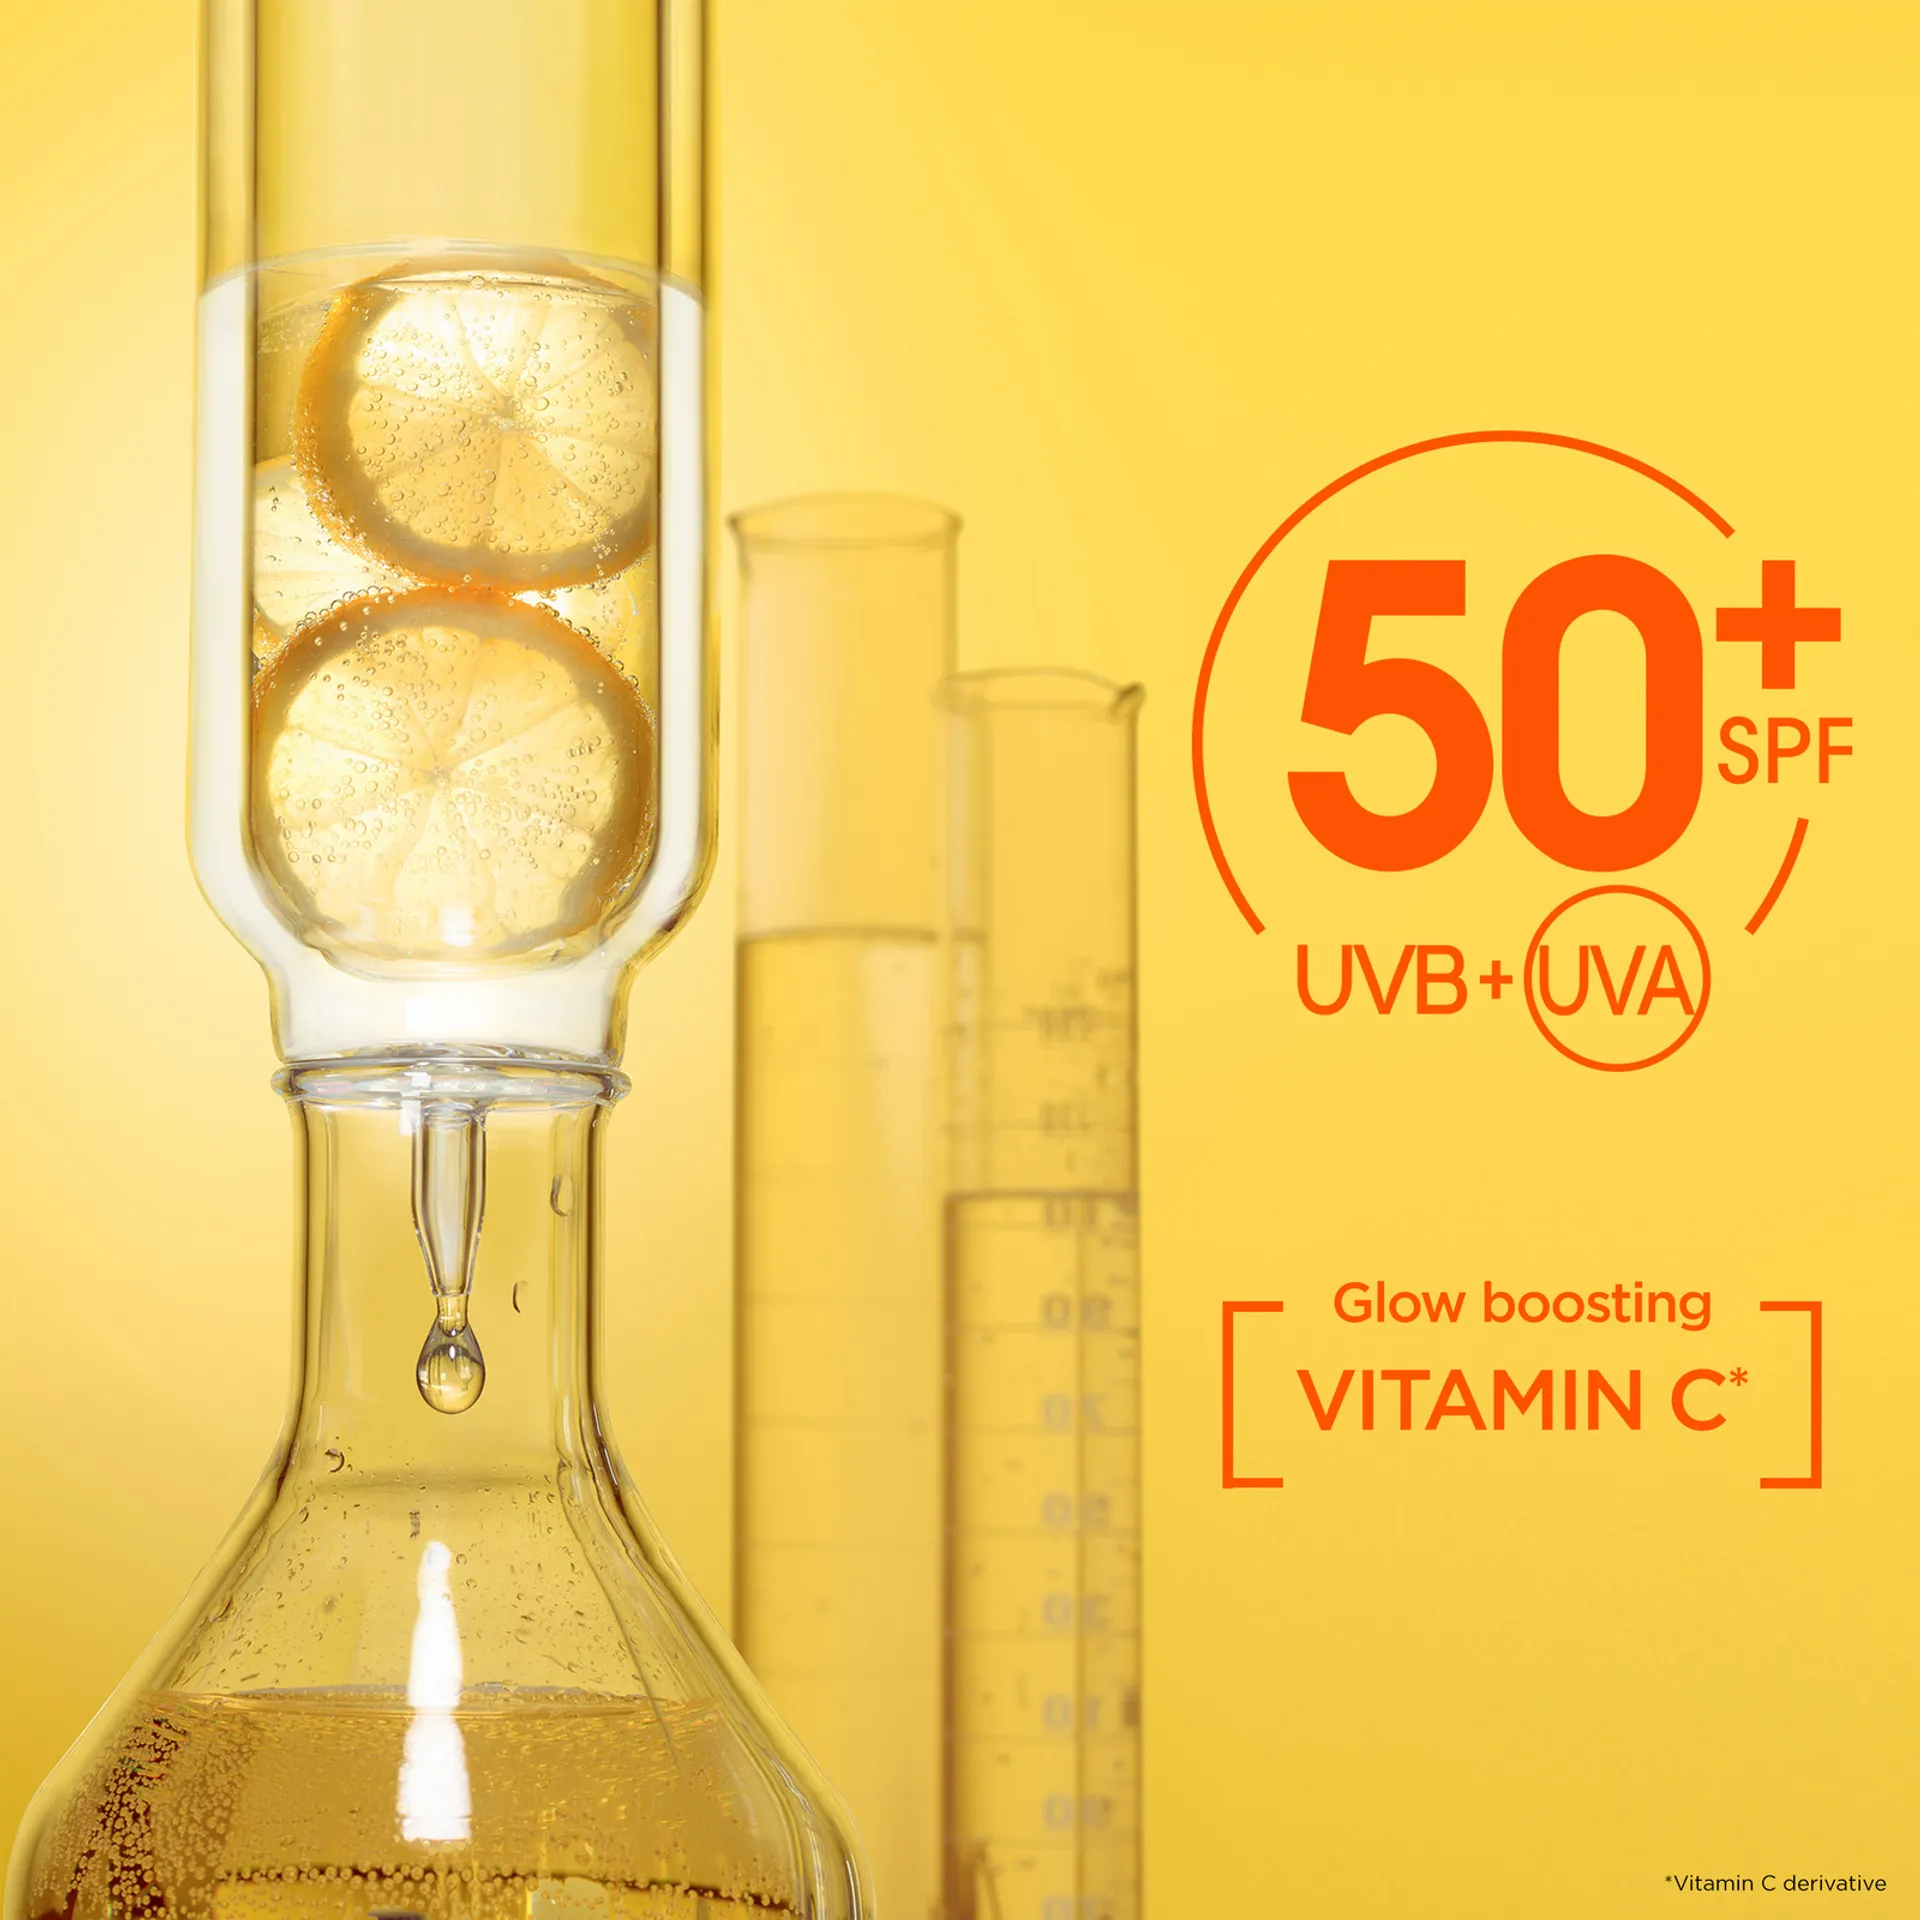 Garnier SkinActive Vitamin C UV Daily Fluid SK50+ Sheer Tint päivävoide väsyneelle iholle 40ml - 3